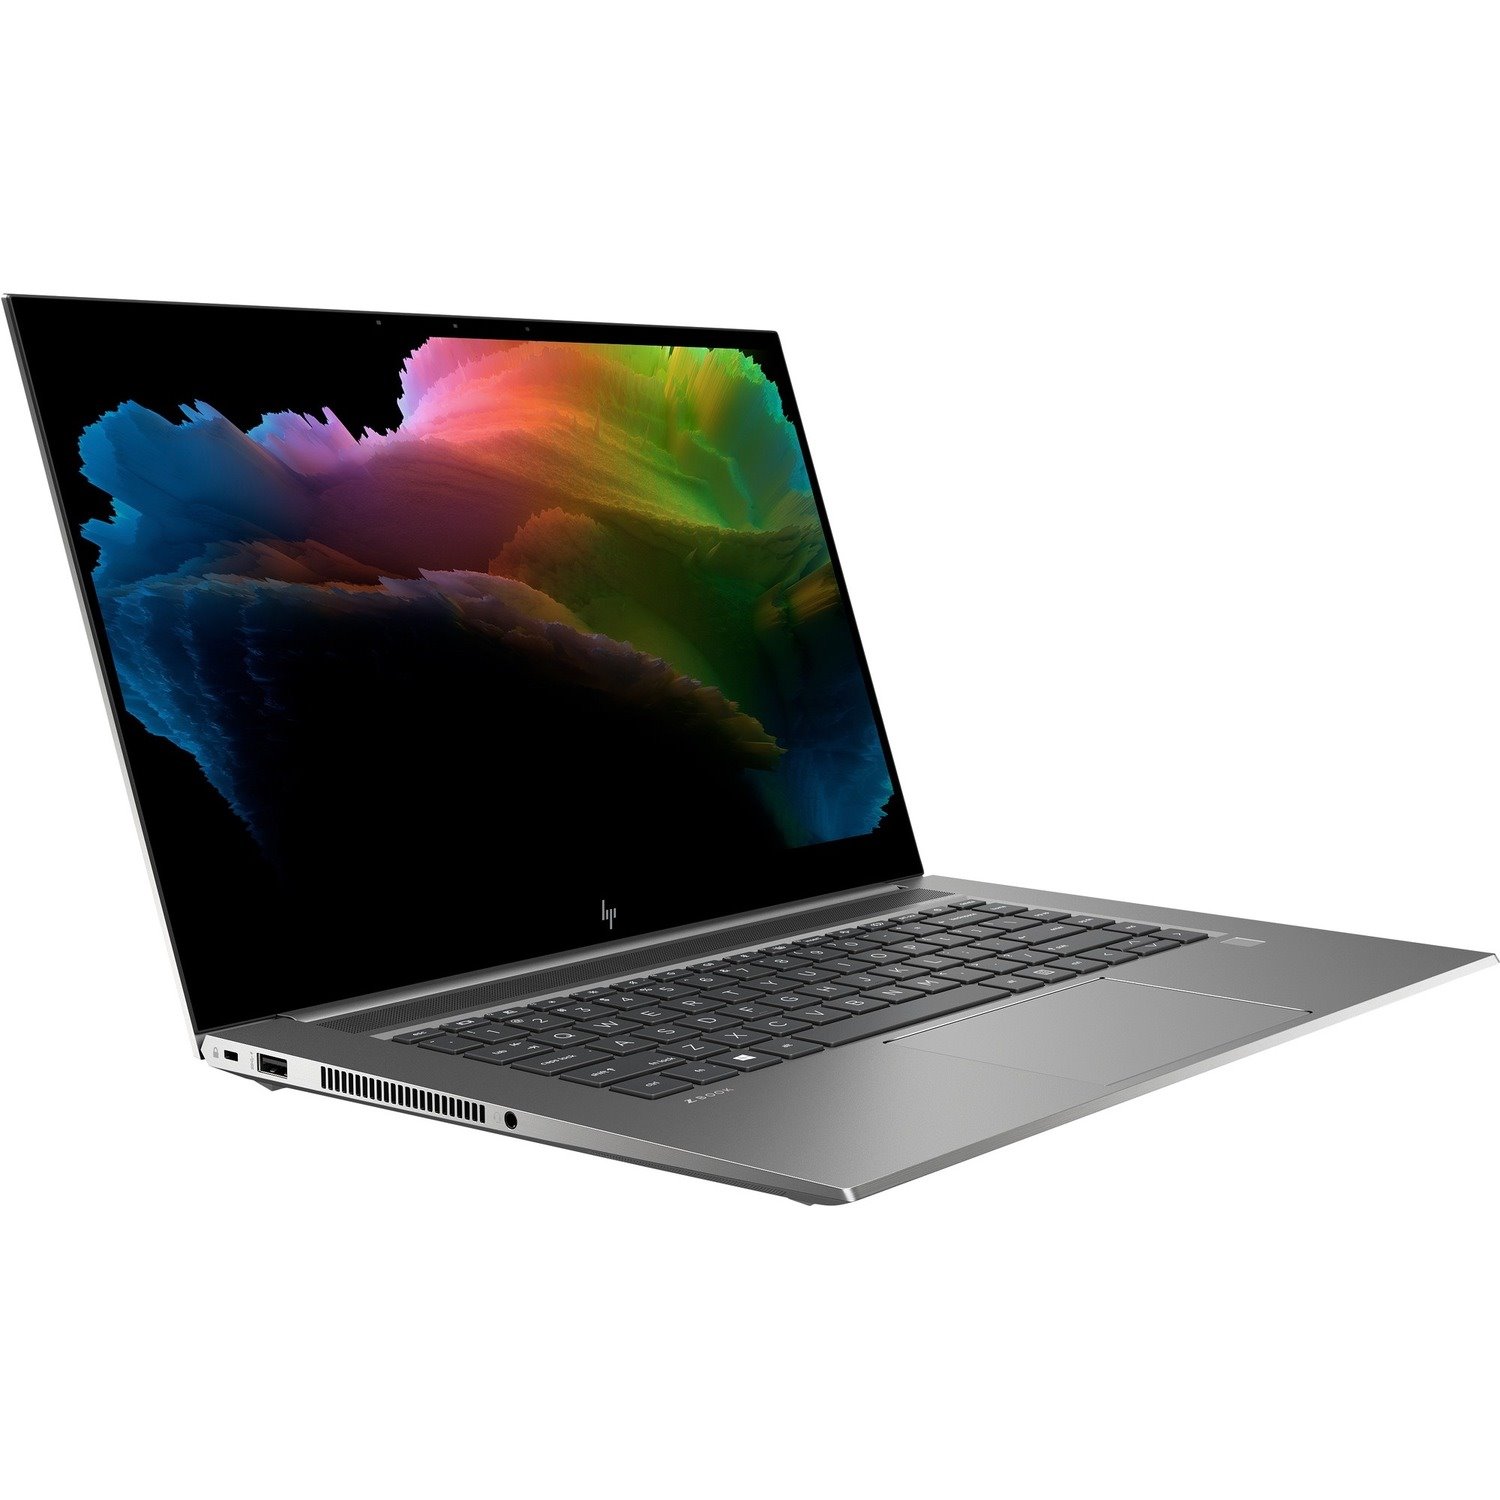 HP ZBook Create G7 39.6 cm (15.6") Mobile Workstation - Full HD - 1920 x 1080 - Intel Core i7 10th Gen i7-10750H Hexa-core (6 Core) 2.70 GHz - 16 GB RAM - 512 GB SSD - Turbo Silver